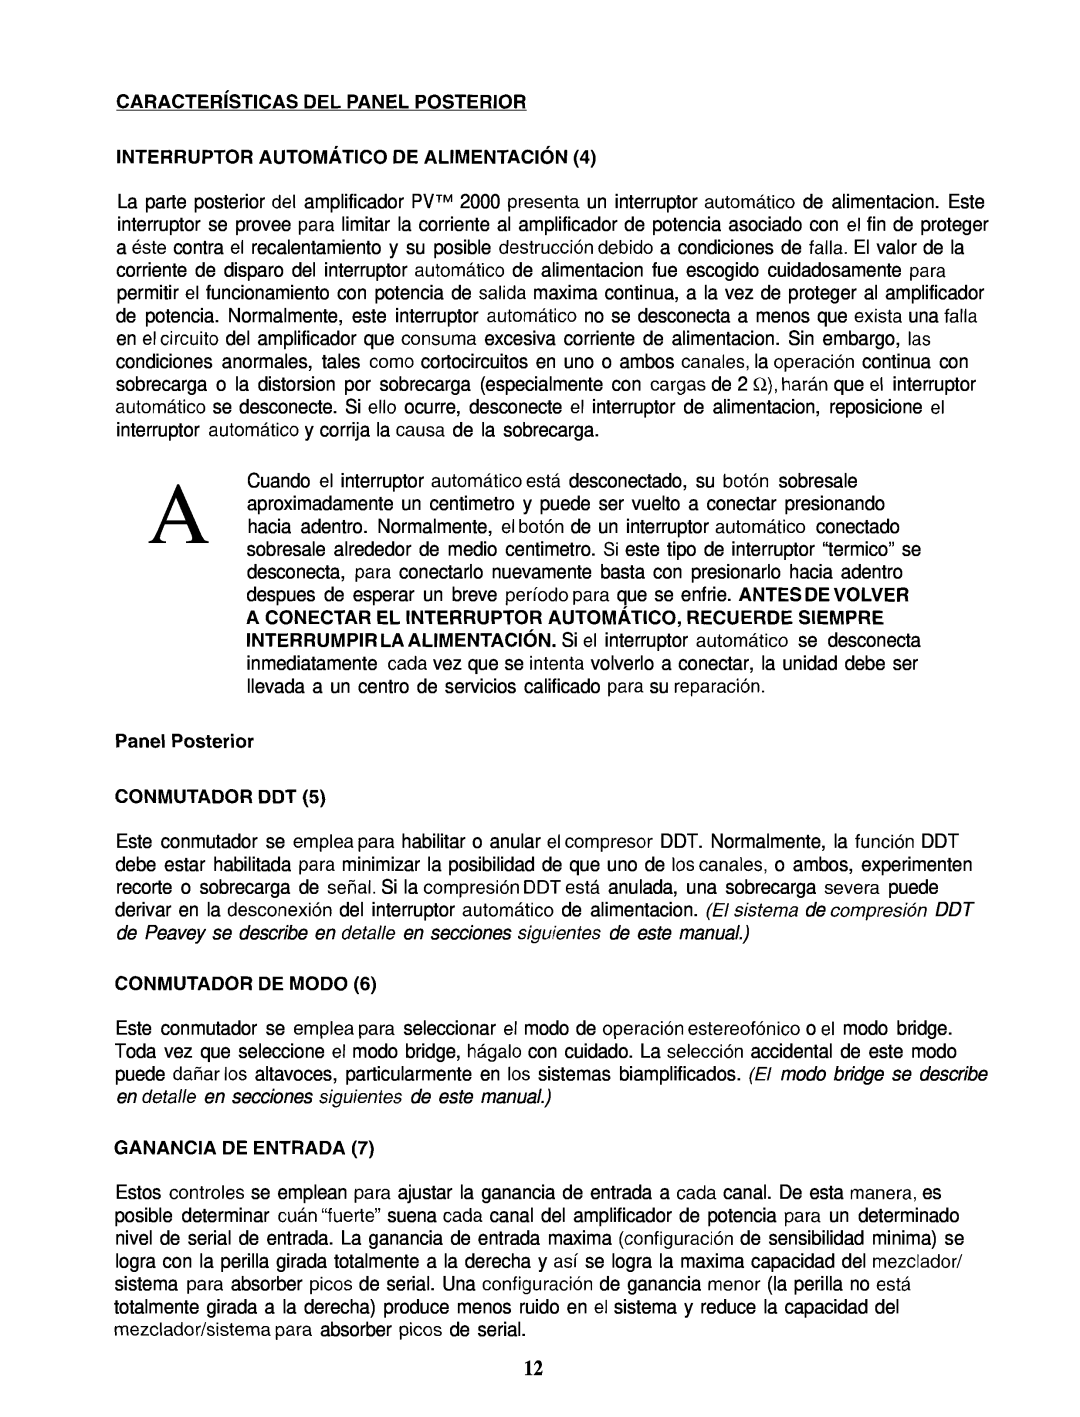 Peavey PV 2000 CARACTERhTlCAS DEL PANEL POSTERIOR, INTERRUPTOR AUTOMAiTlCO DE ALlMENTACldN, Panel Posterior CONMUTADOR DDT 